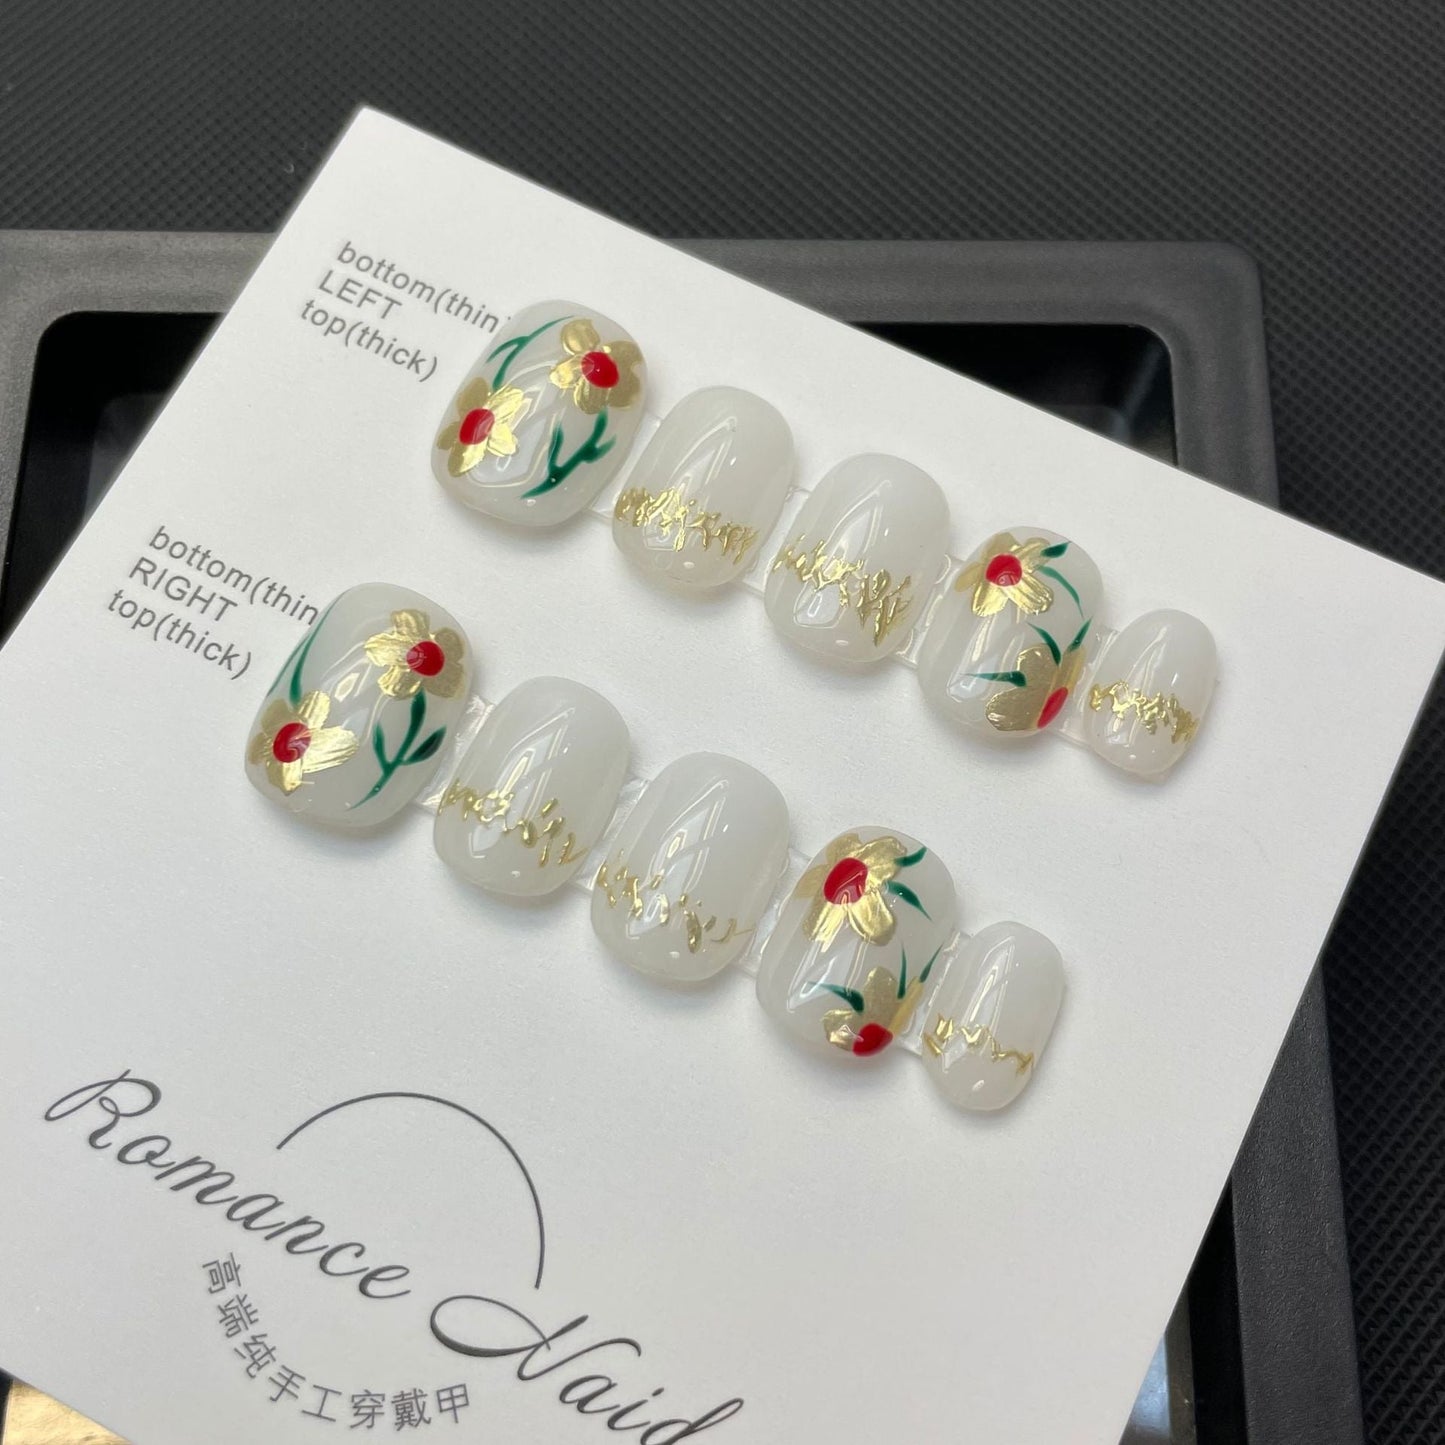 643 Gilded flowers press on nails 100% handmade false nails white